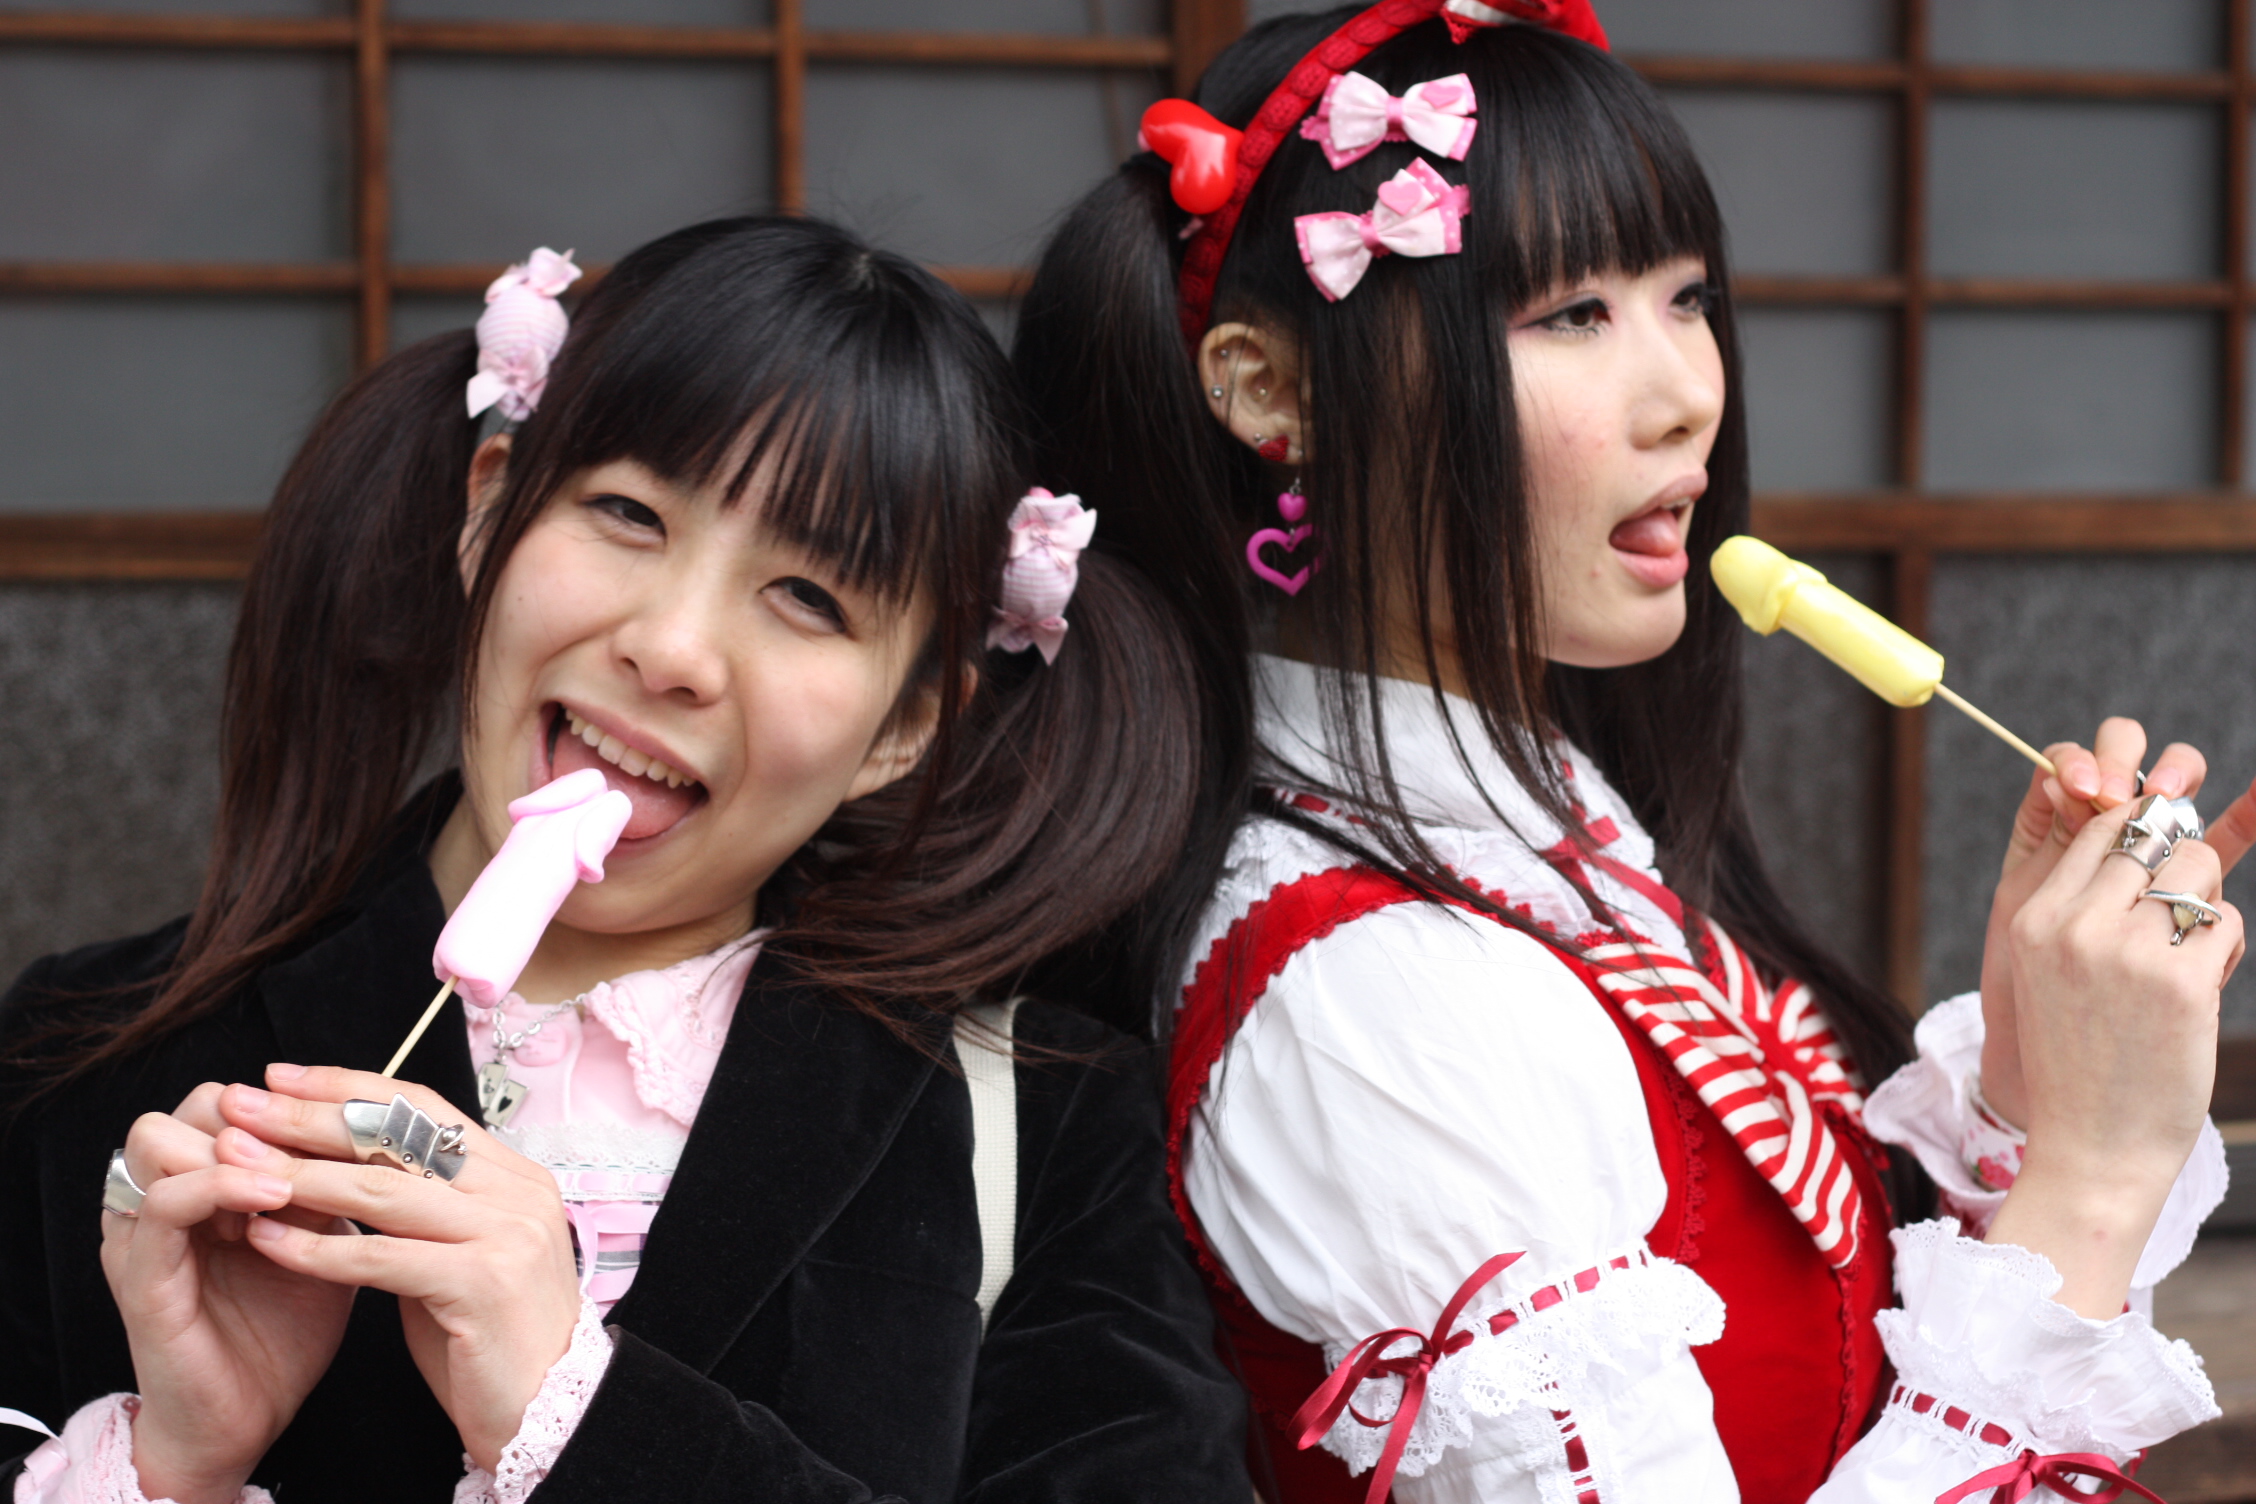 Fertility festivals - Japanese girls enjoy penis candies at the phallus festival